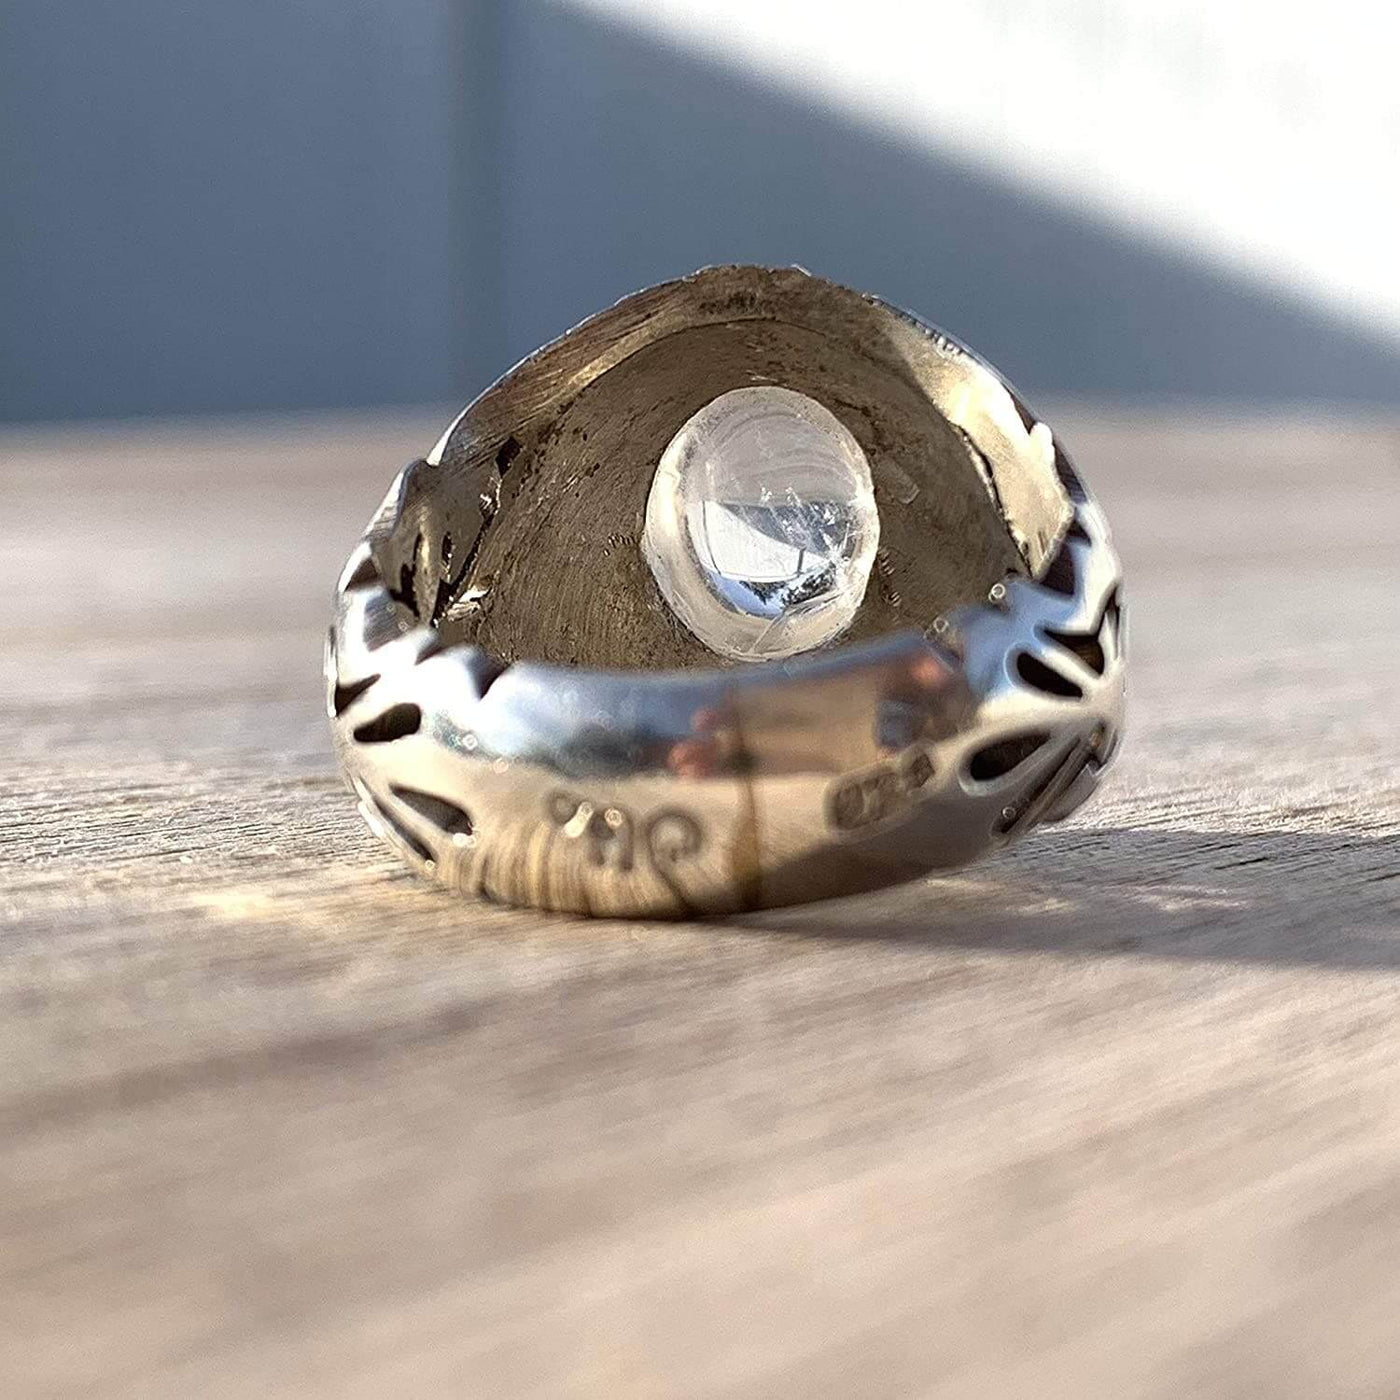 Dur e Najaf Ring Silver | خاتم در النجف الاصلي | AlAliGems | Genuine Dur E Najaf Stone Ring | Silver 925 Size 10.5 - Al Ali Gems